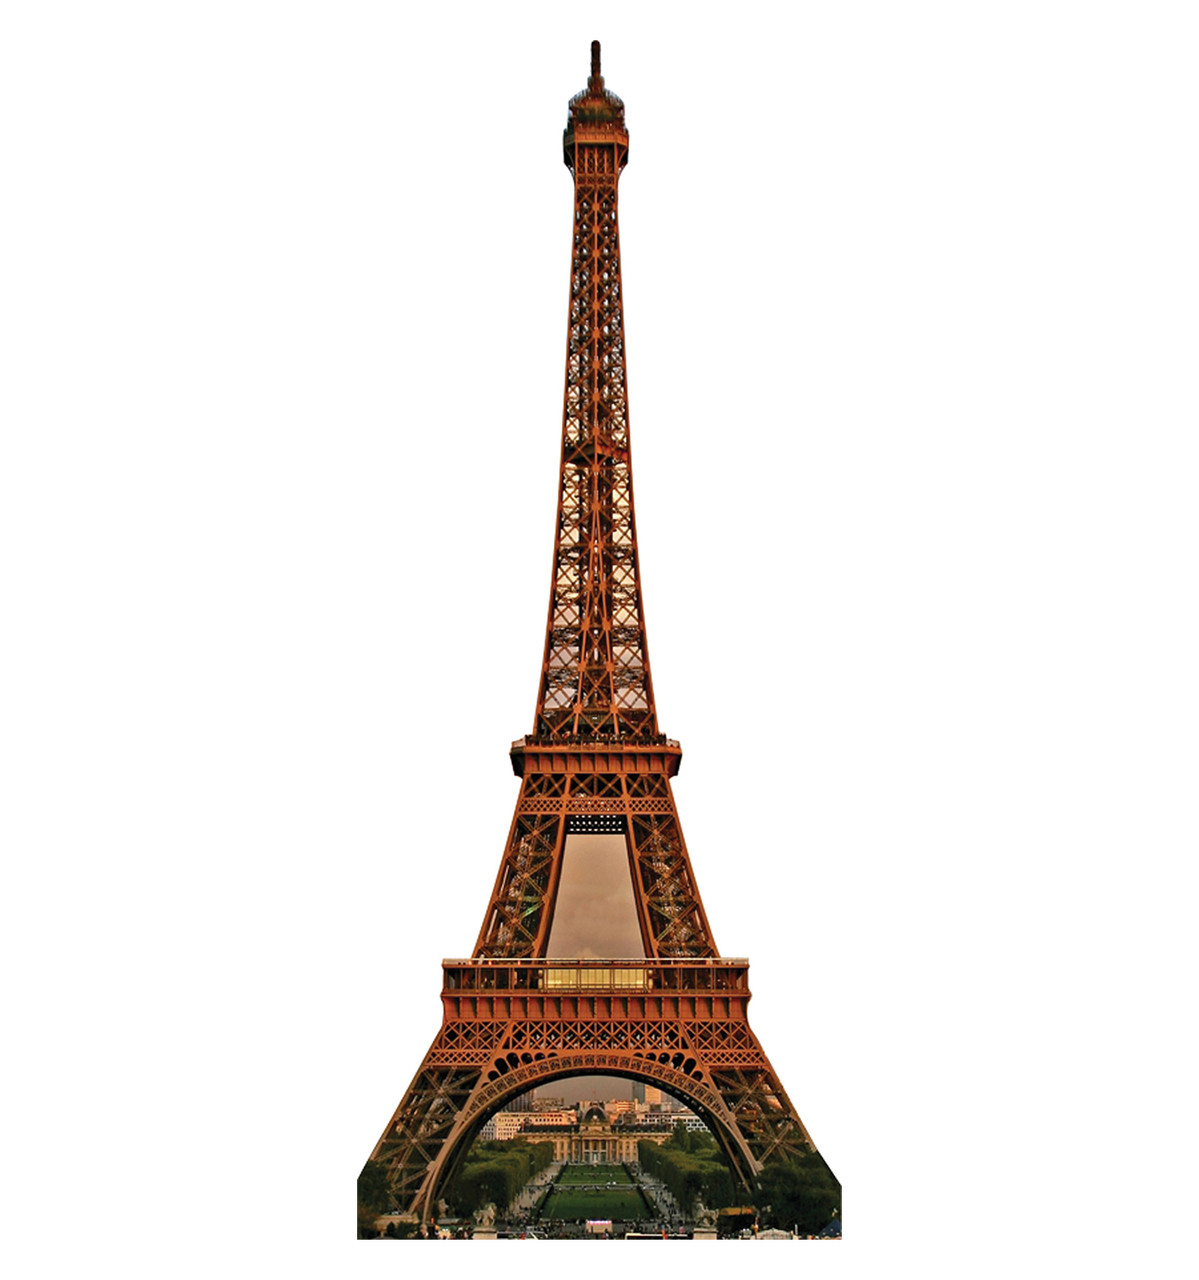 Life-size Eiffel Tower Cardboard Standup | Cardboard Cutout